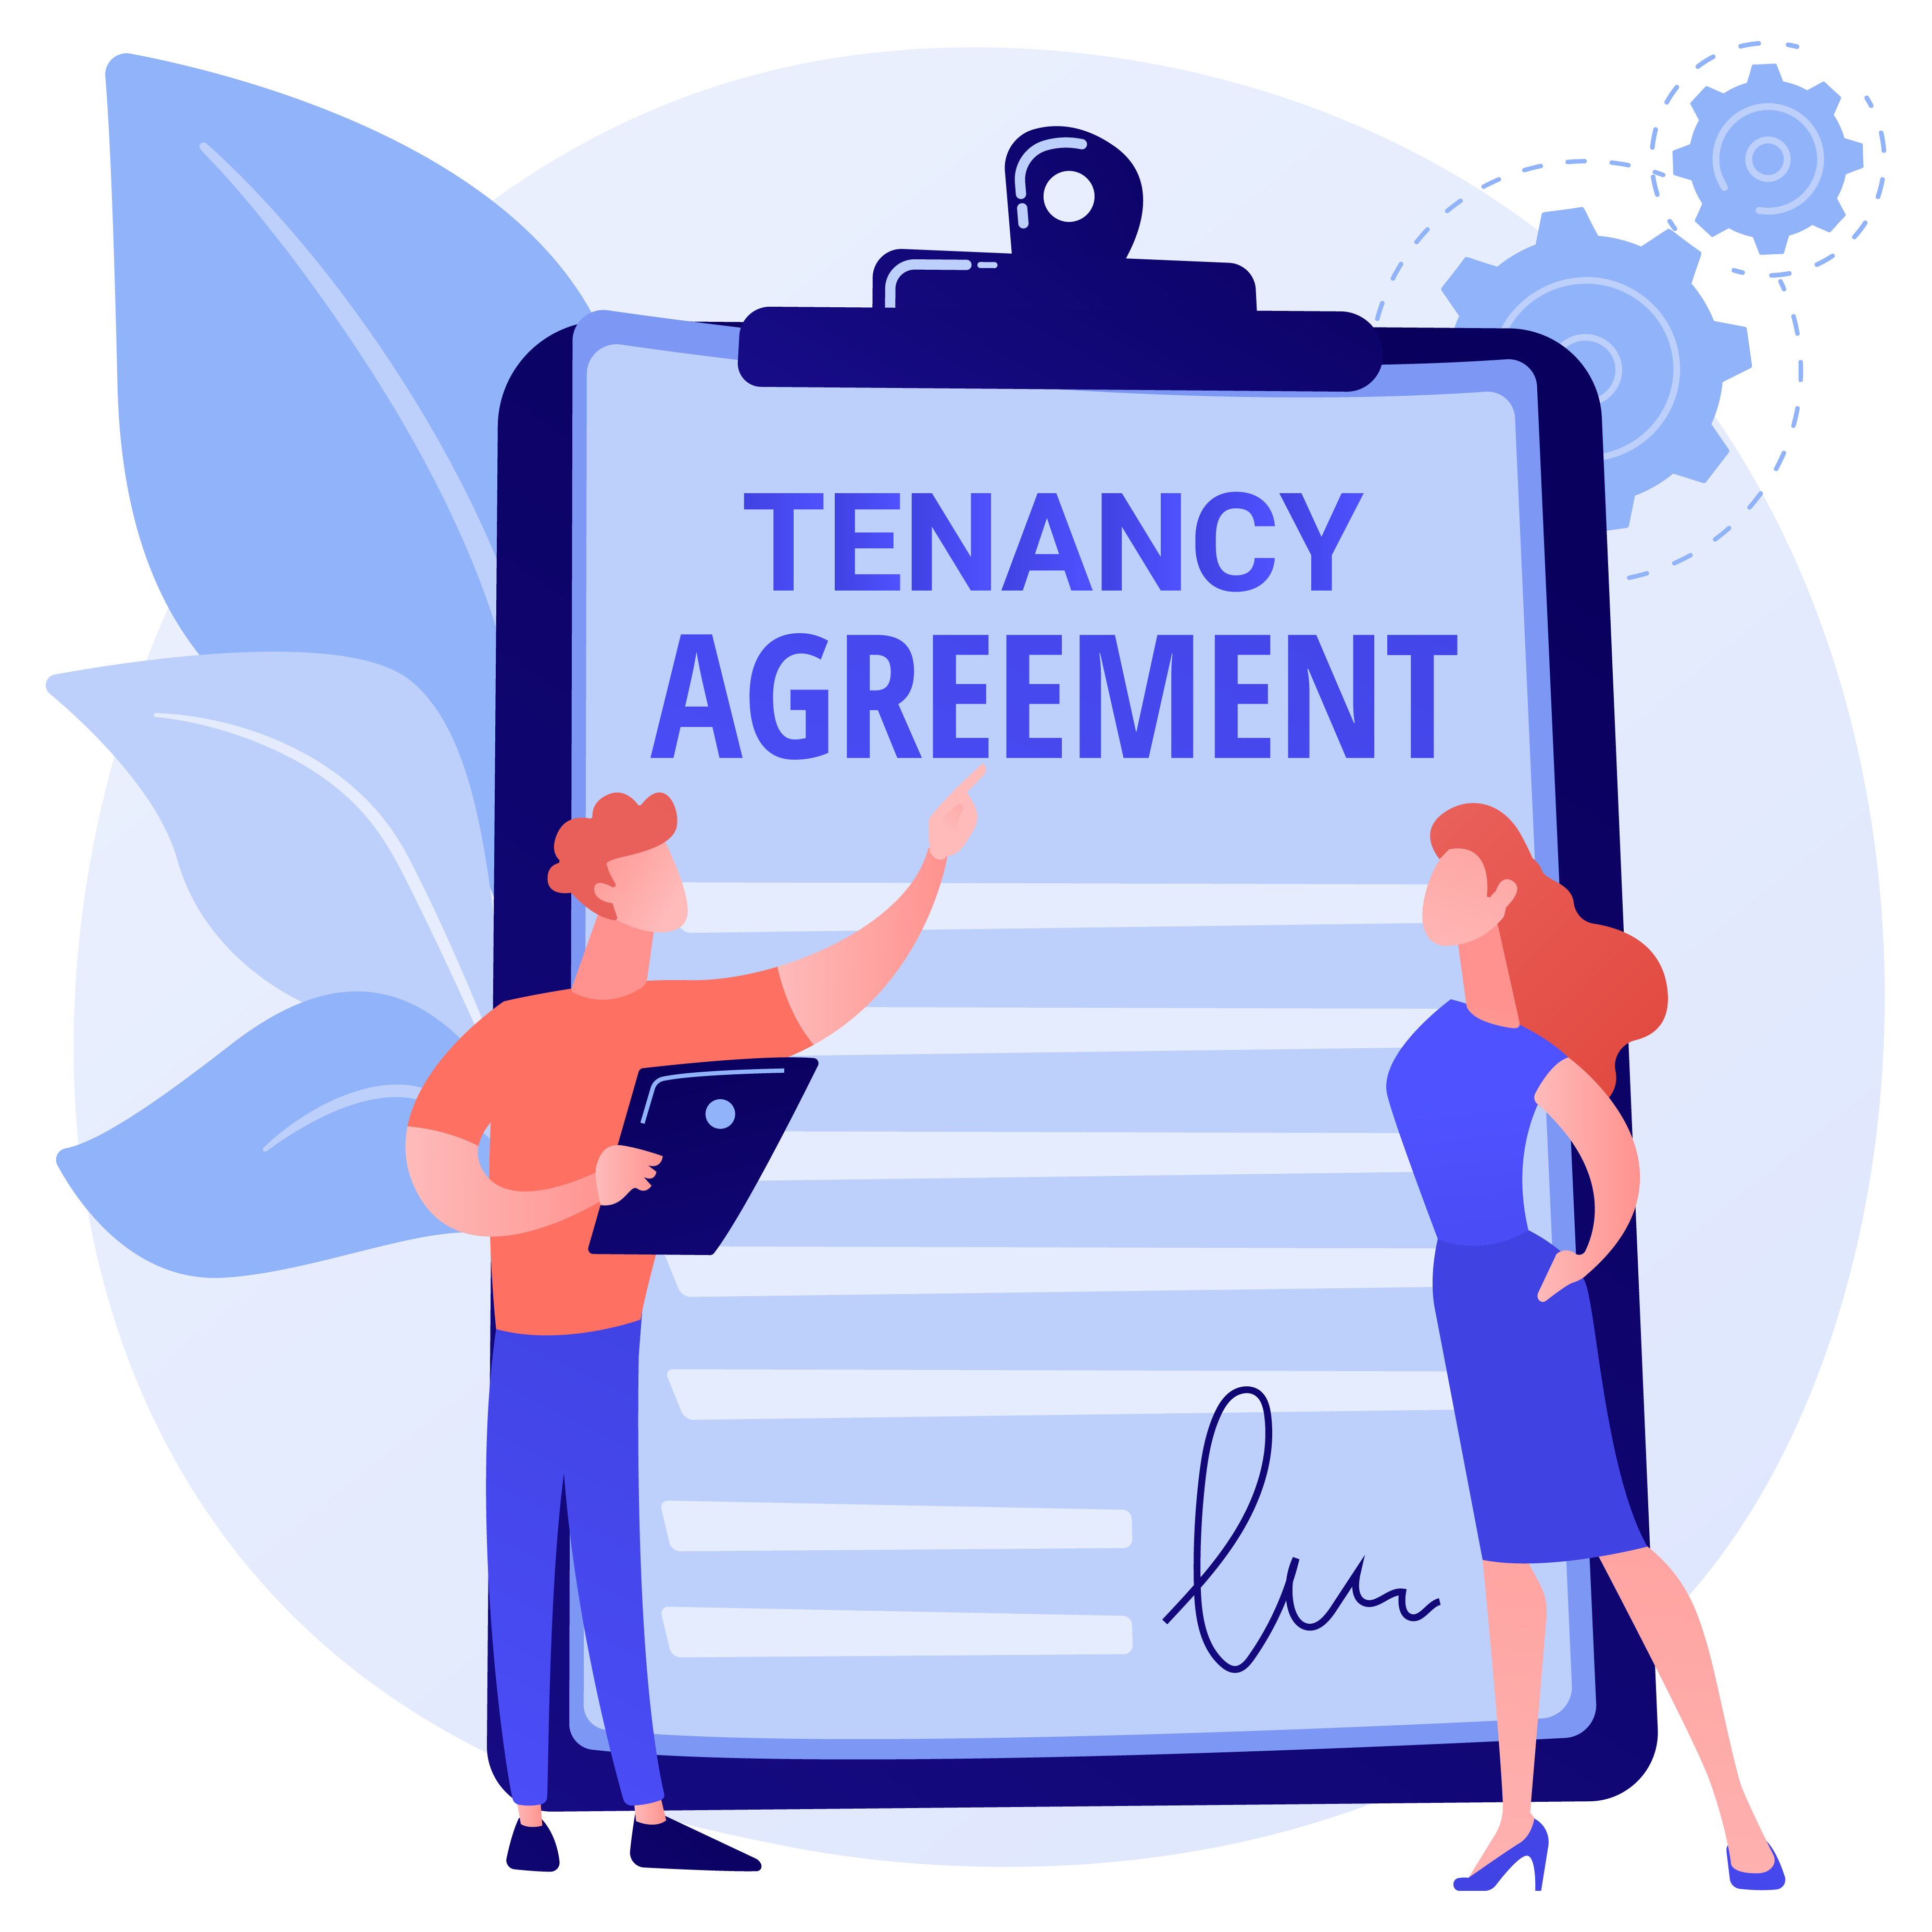 Tenancy Agreements